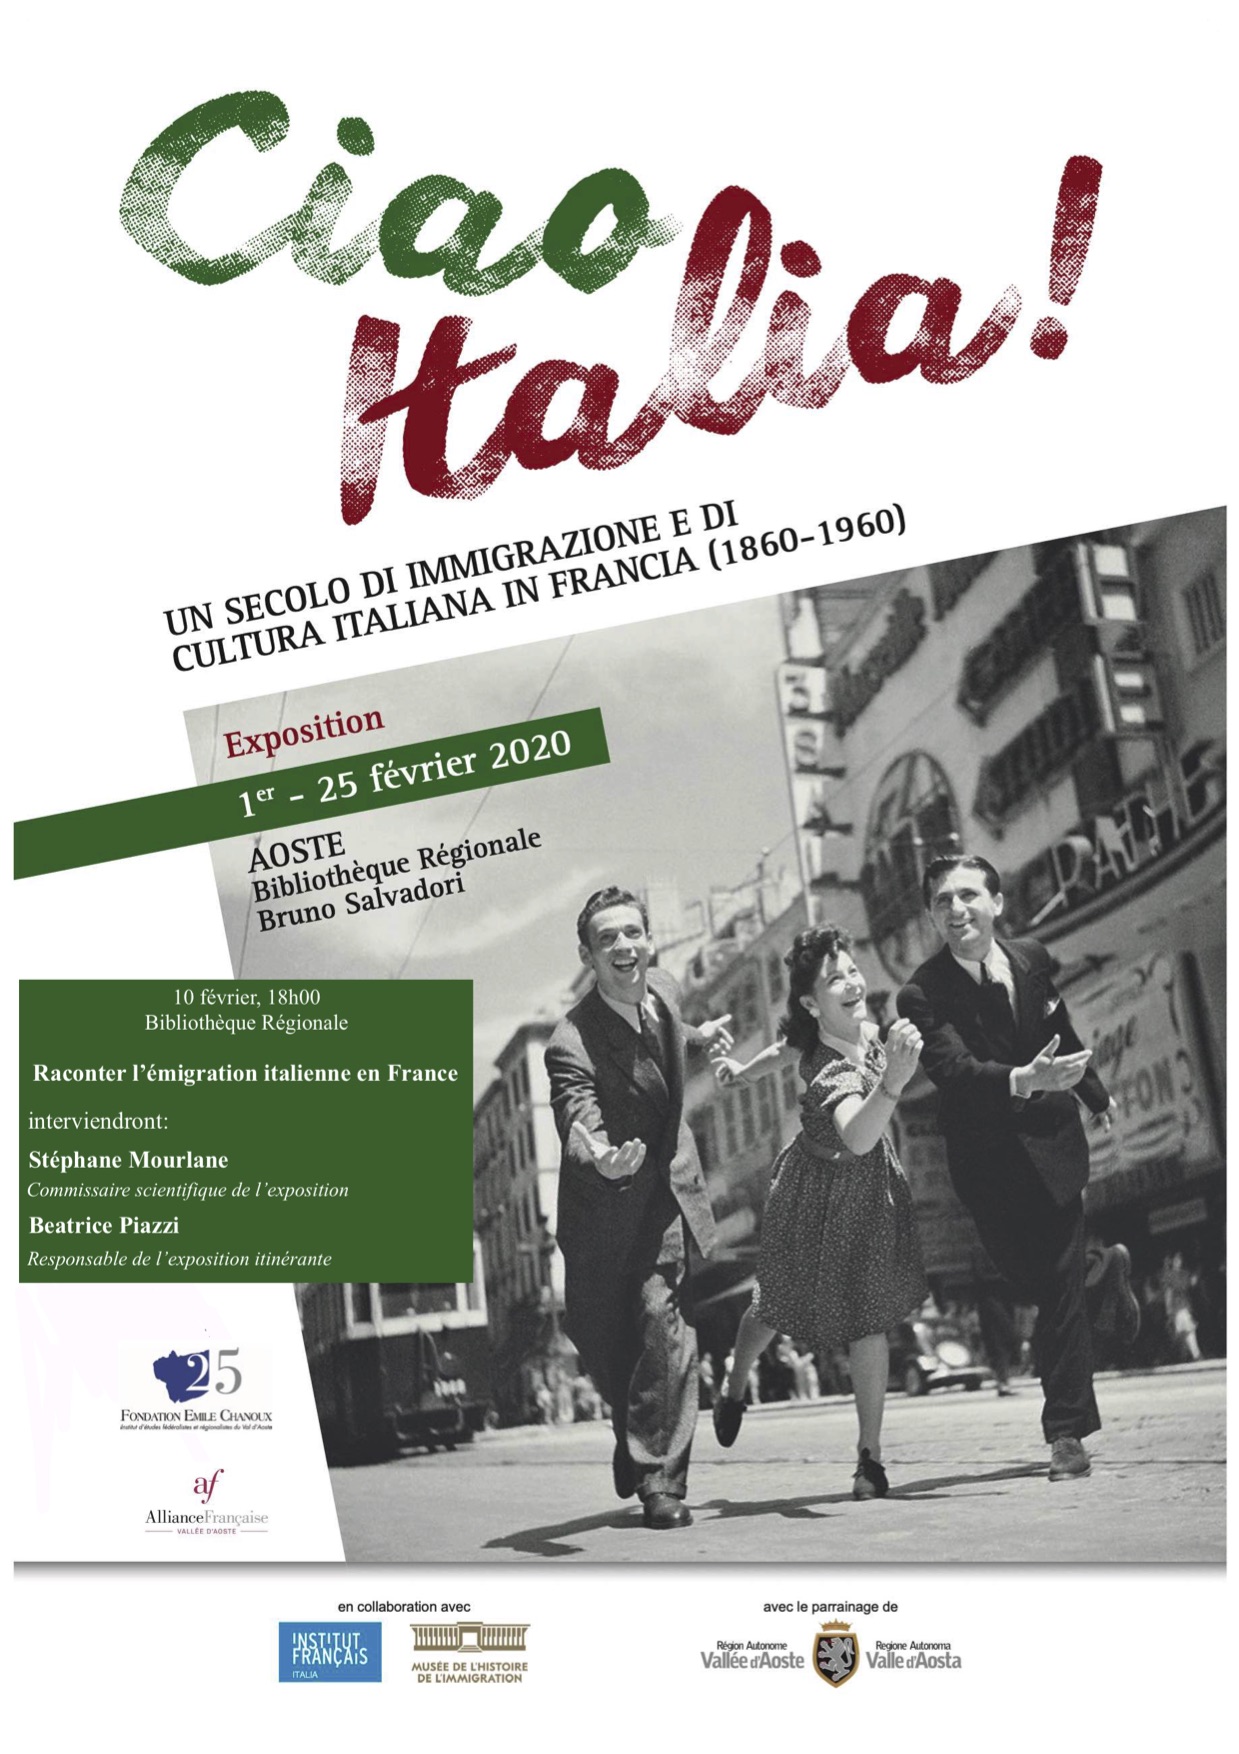 Ciao Italia! Un siècle d’immigration et de culture italiennes en France